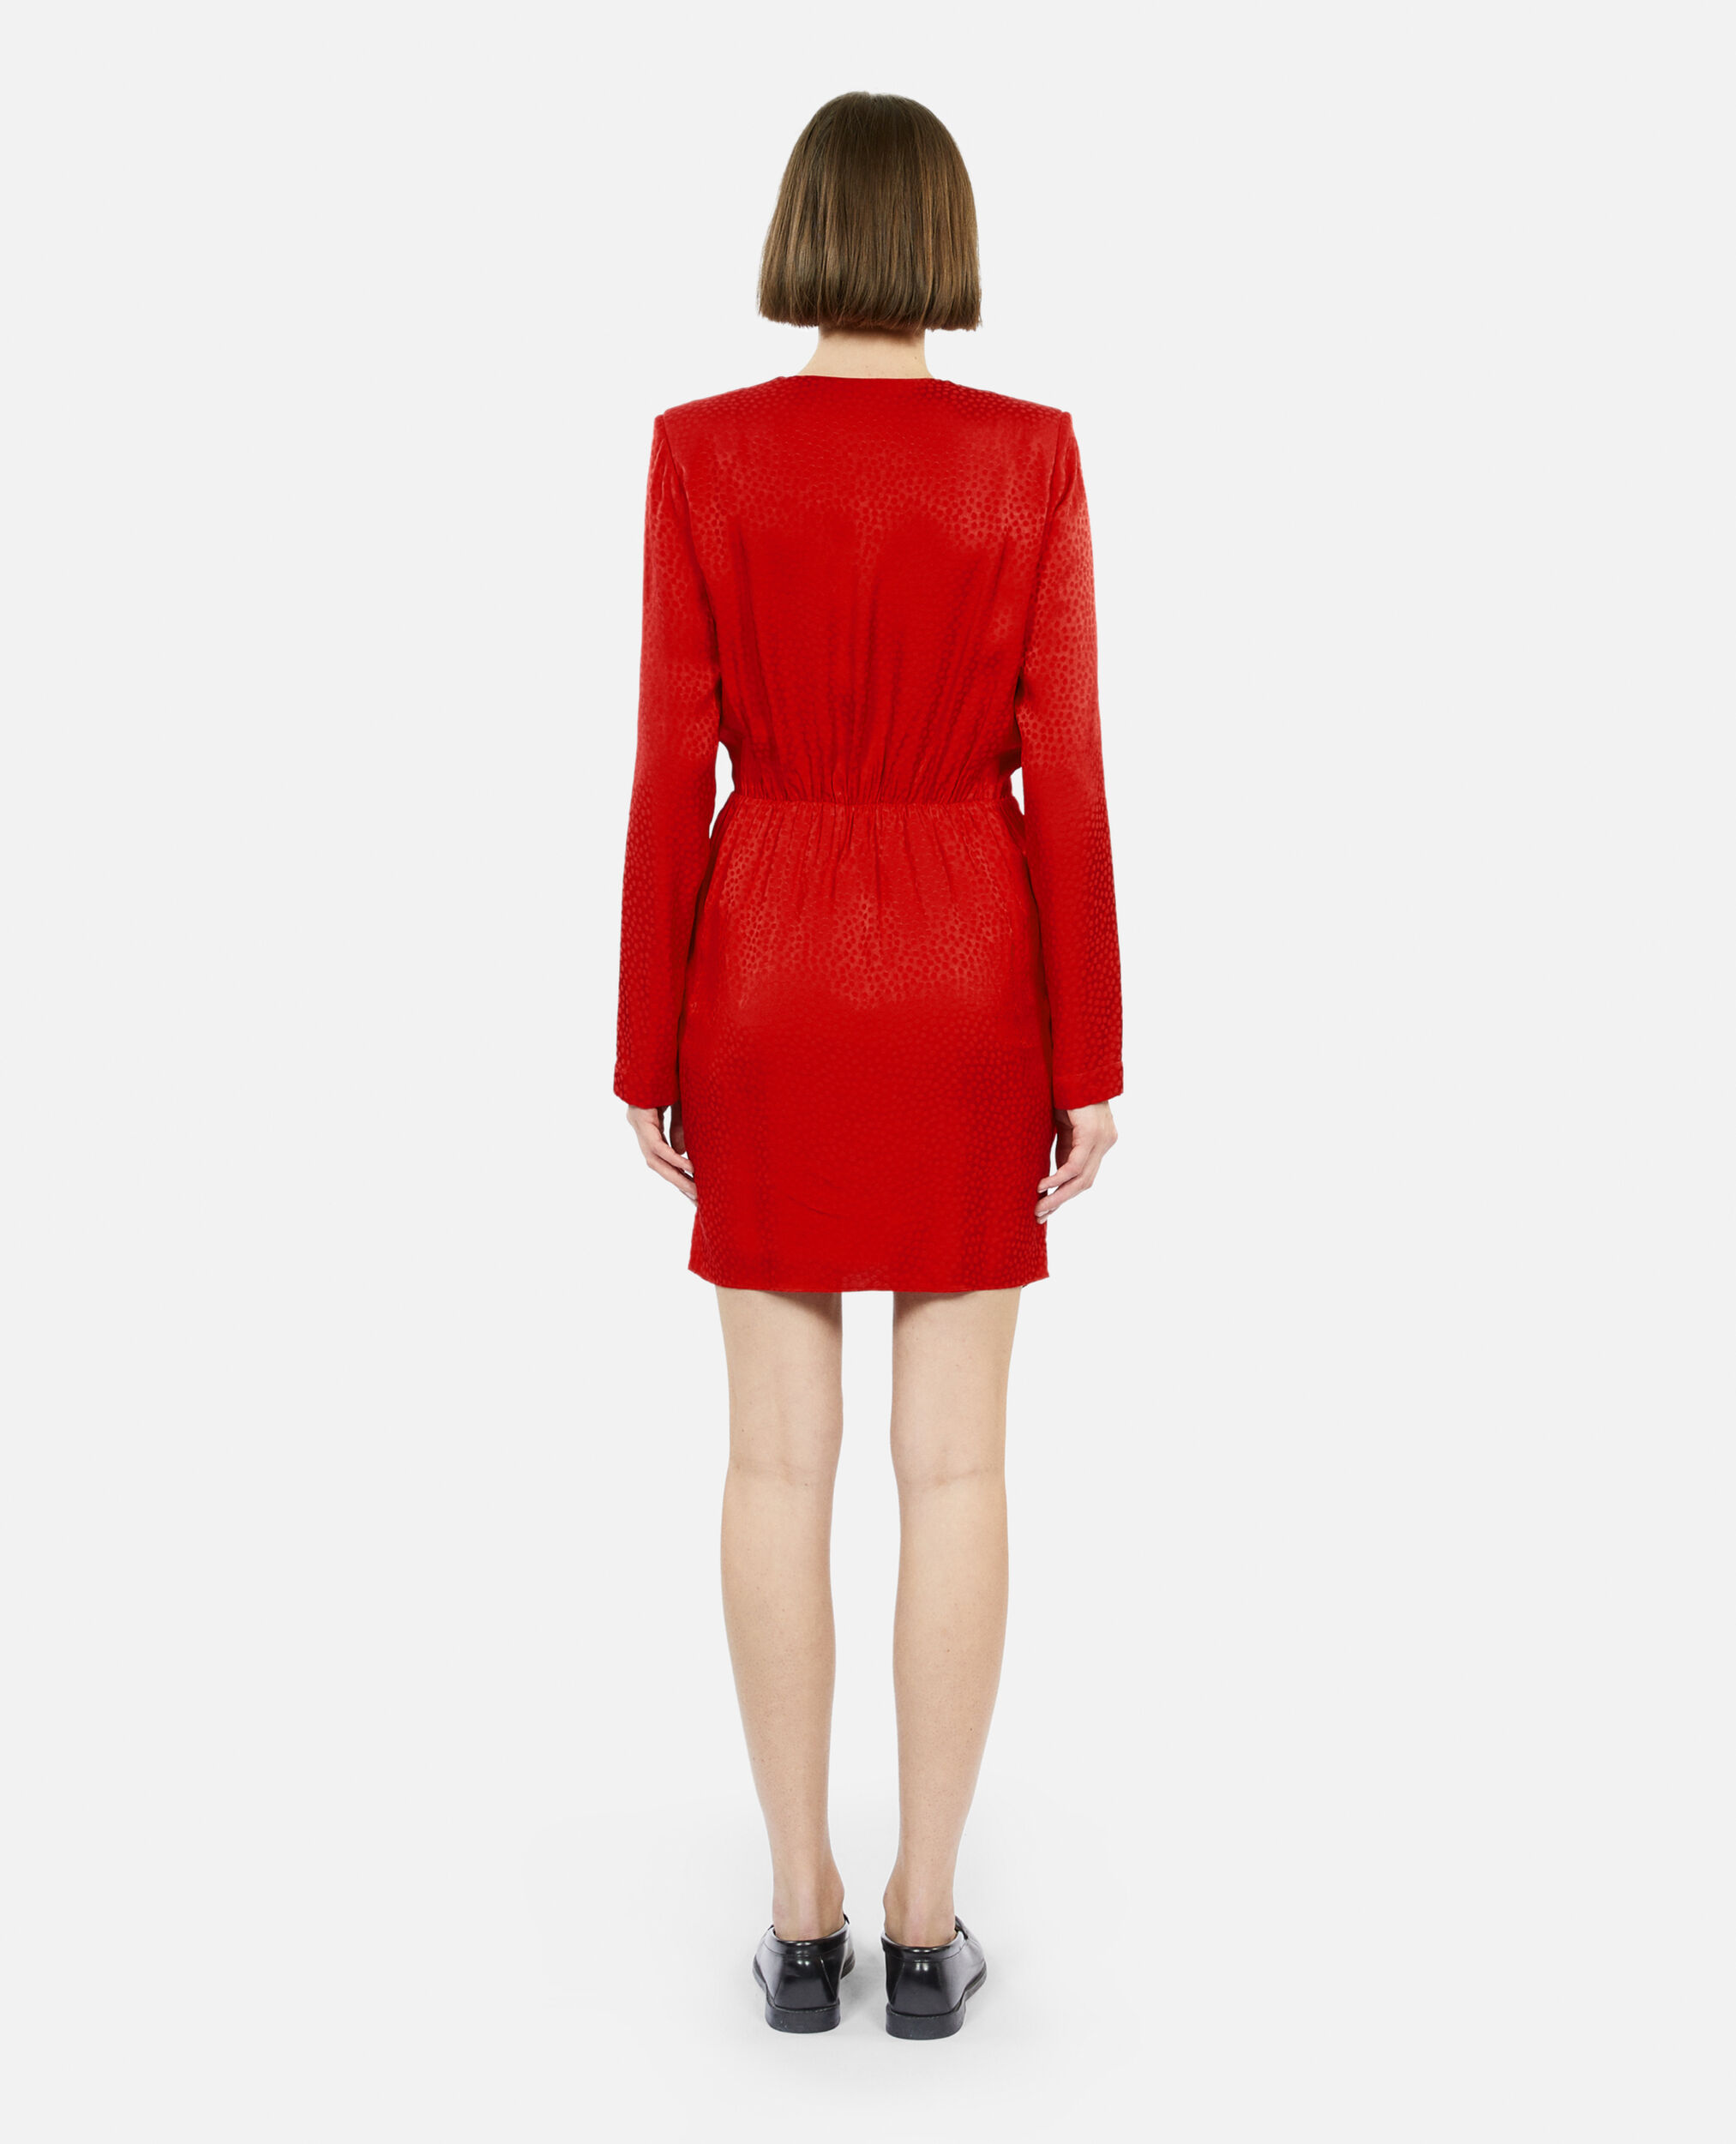 Vestido corto rojo lunares jacquard, ORIENTAL RED, hi-res image number null